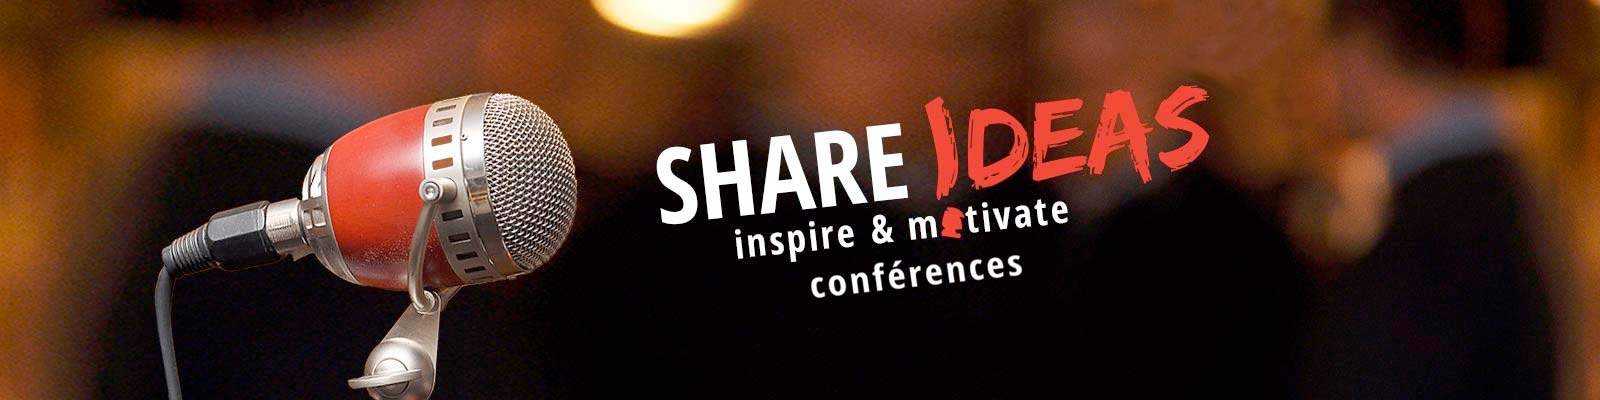 ShareIdeas - inspirer et motiver